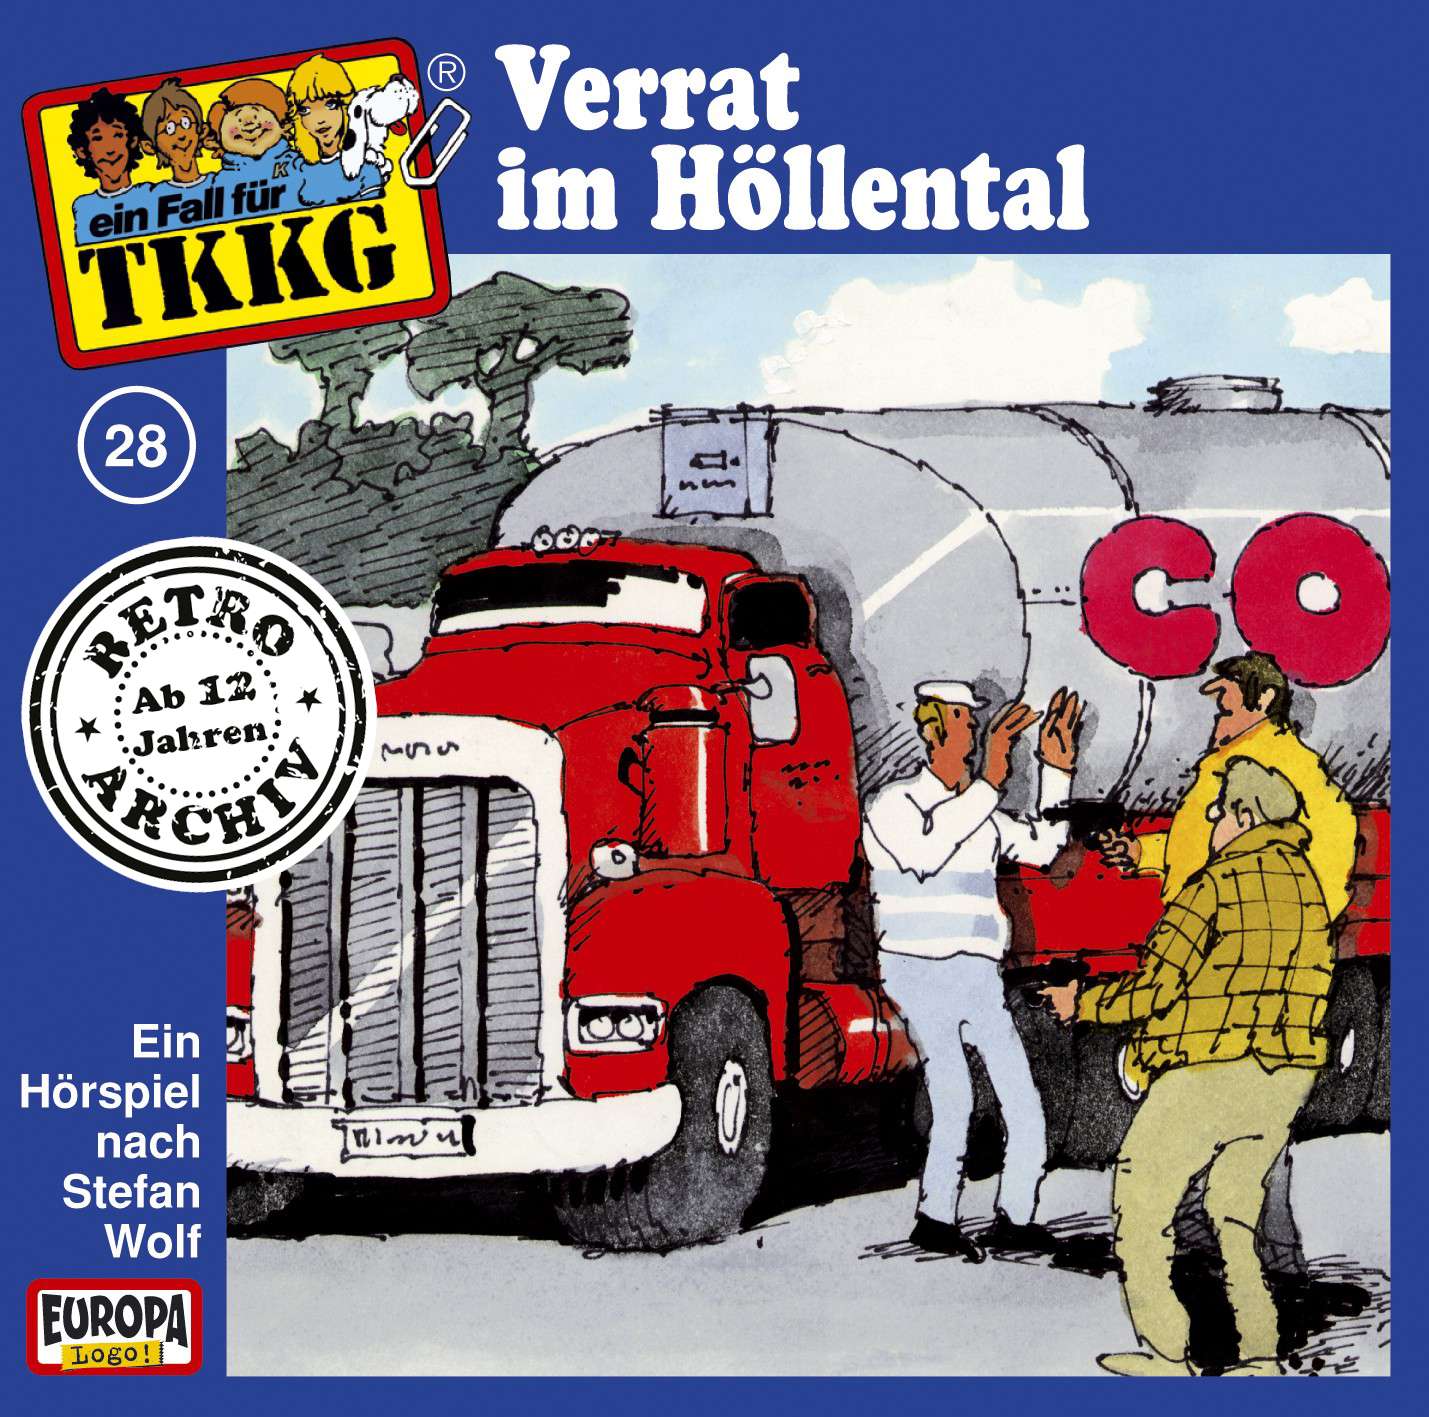 TKKG Retro-Archiv: Verrat im Höllental